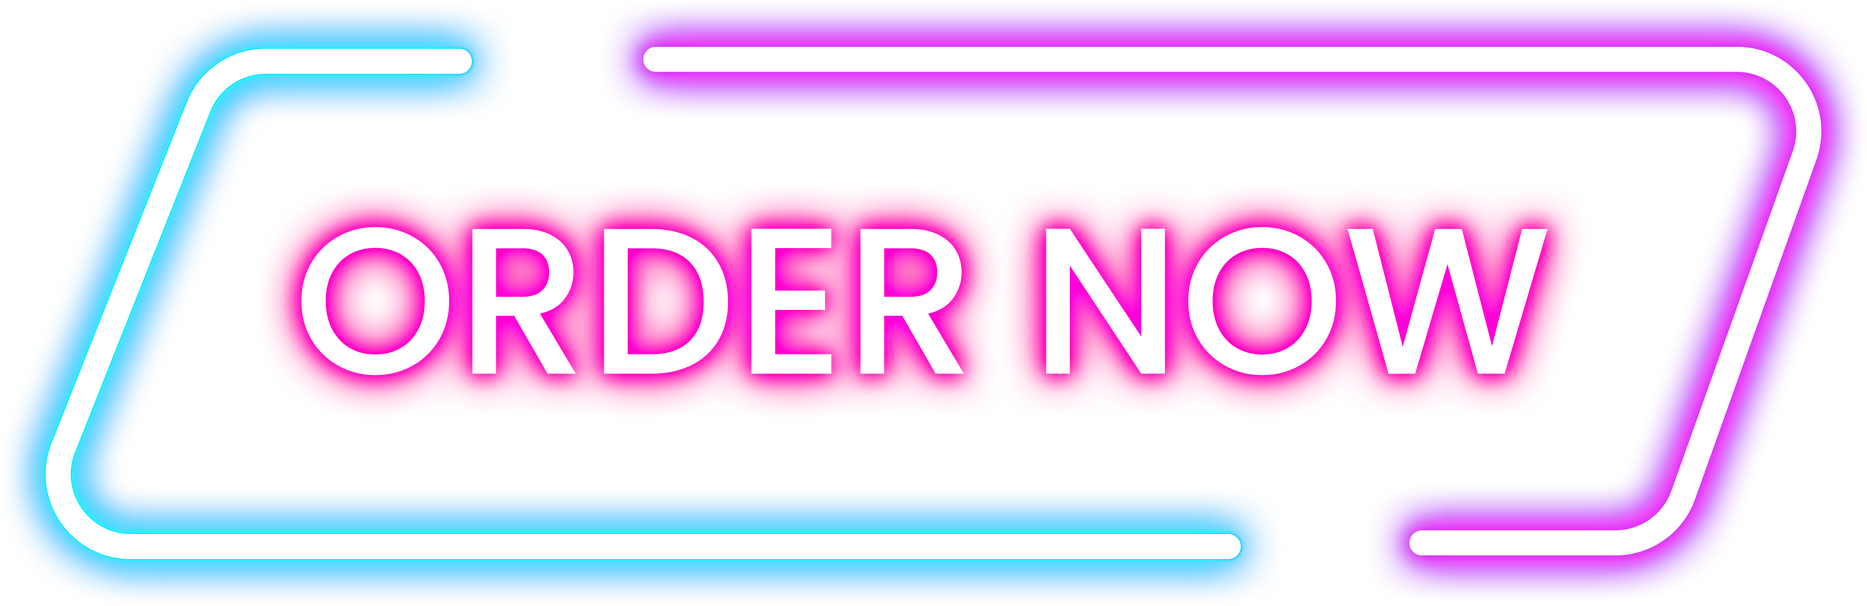 Order Now Neon Button